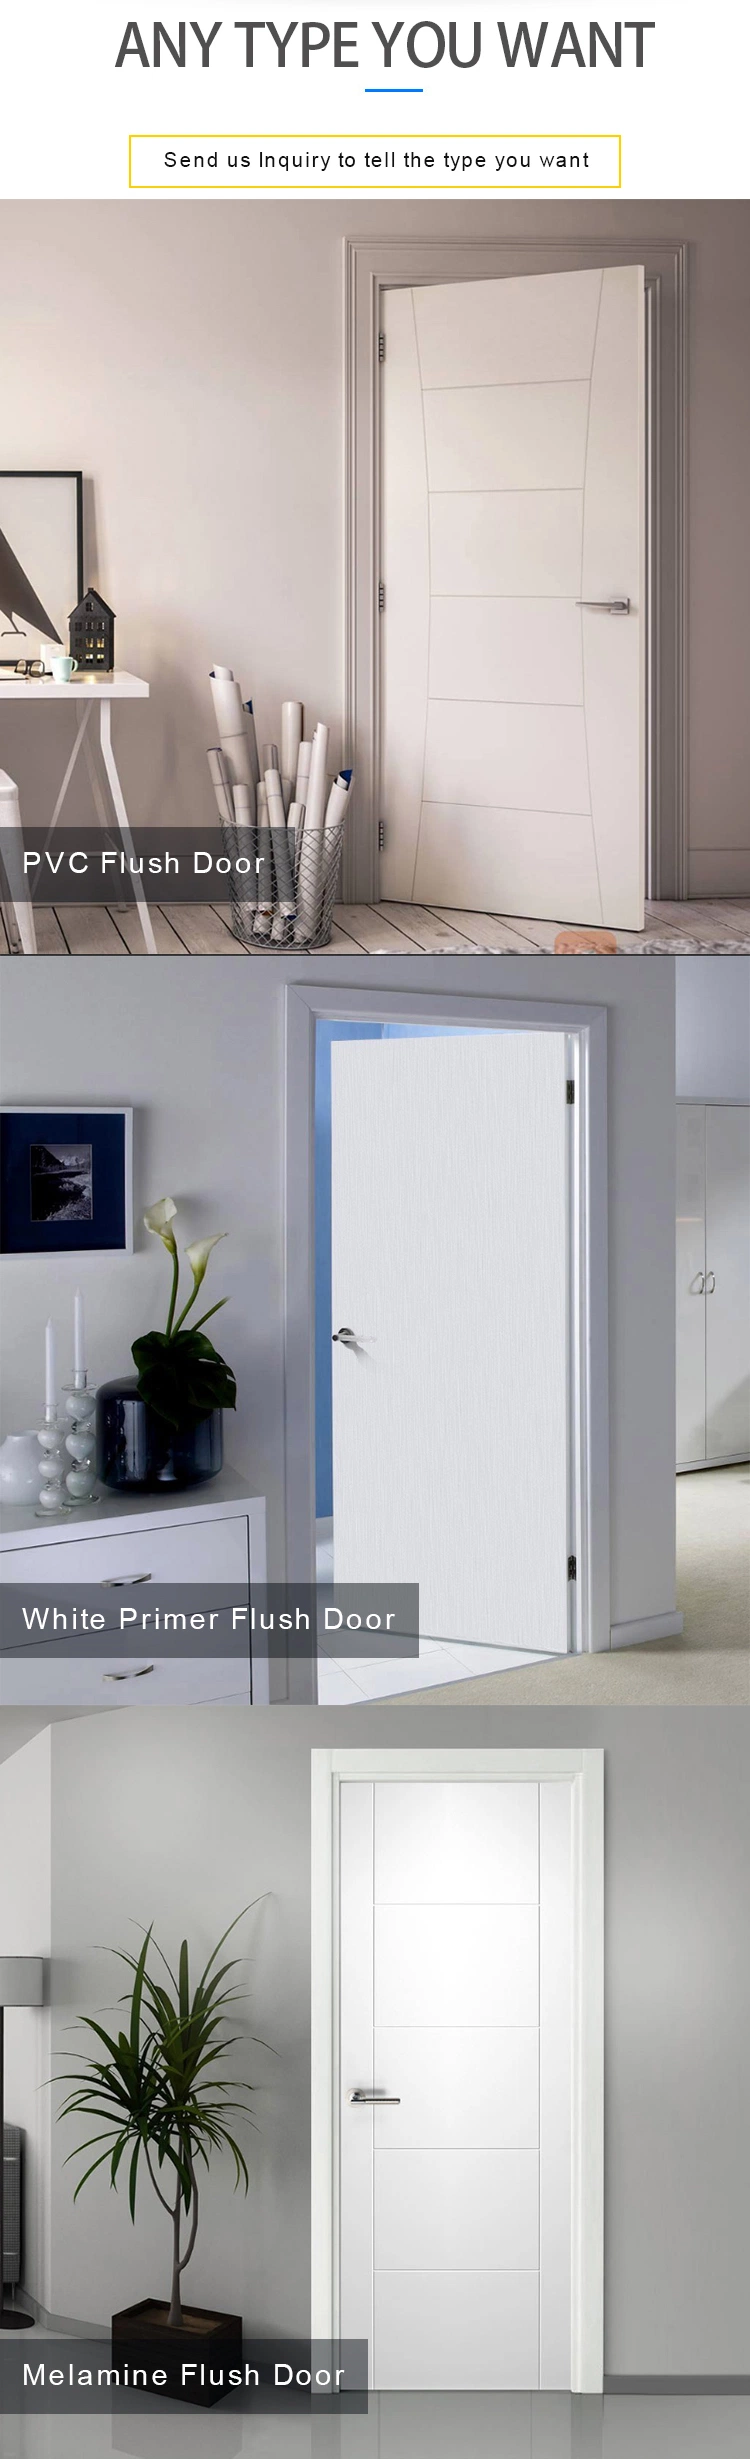 Jhk-F01-6 Molded Prefinished Plywood Hollow Core Single Flush Door